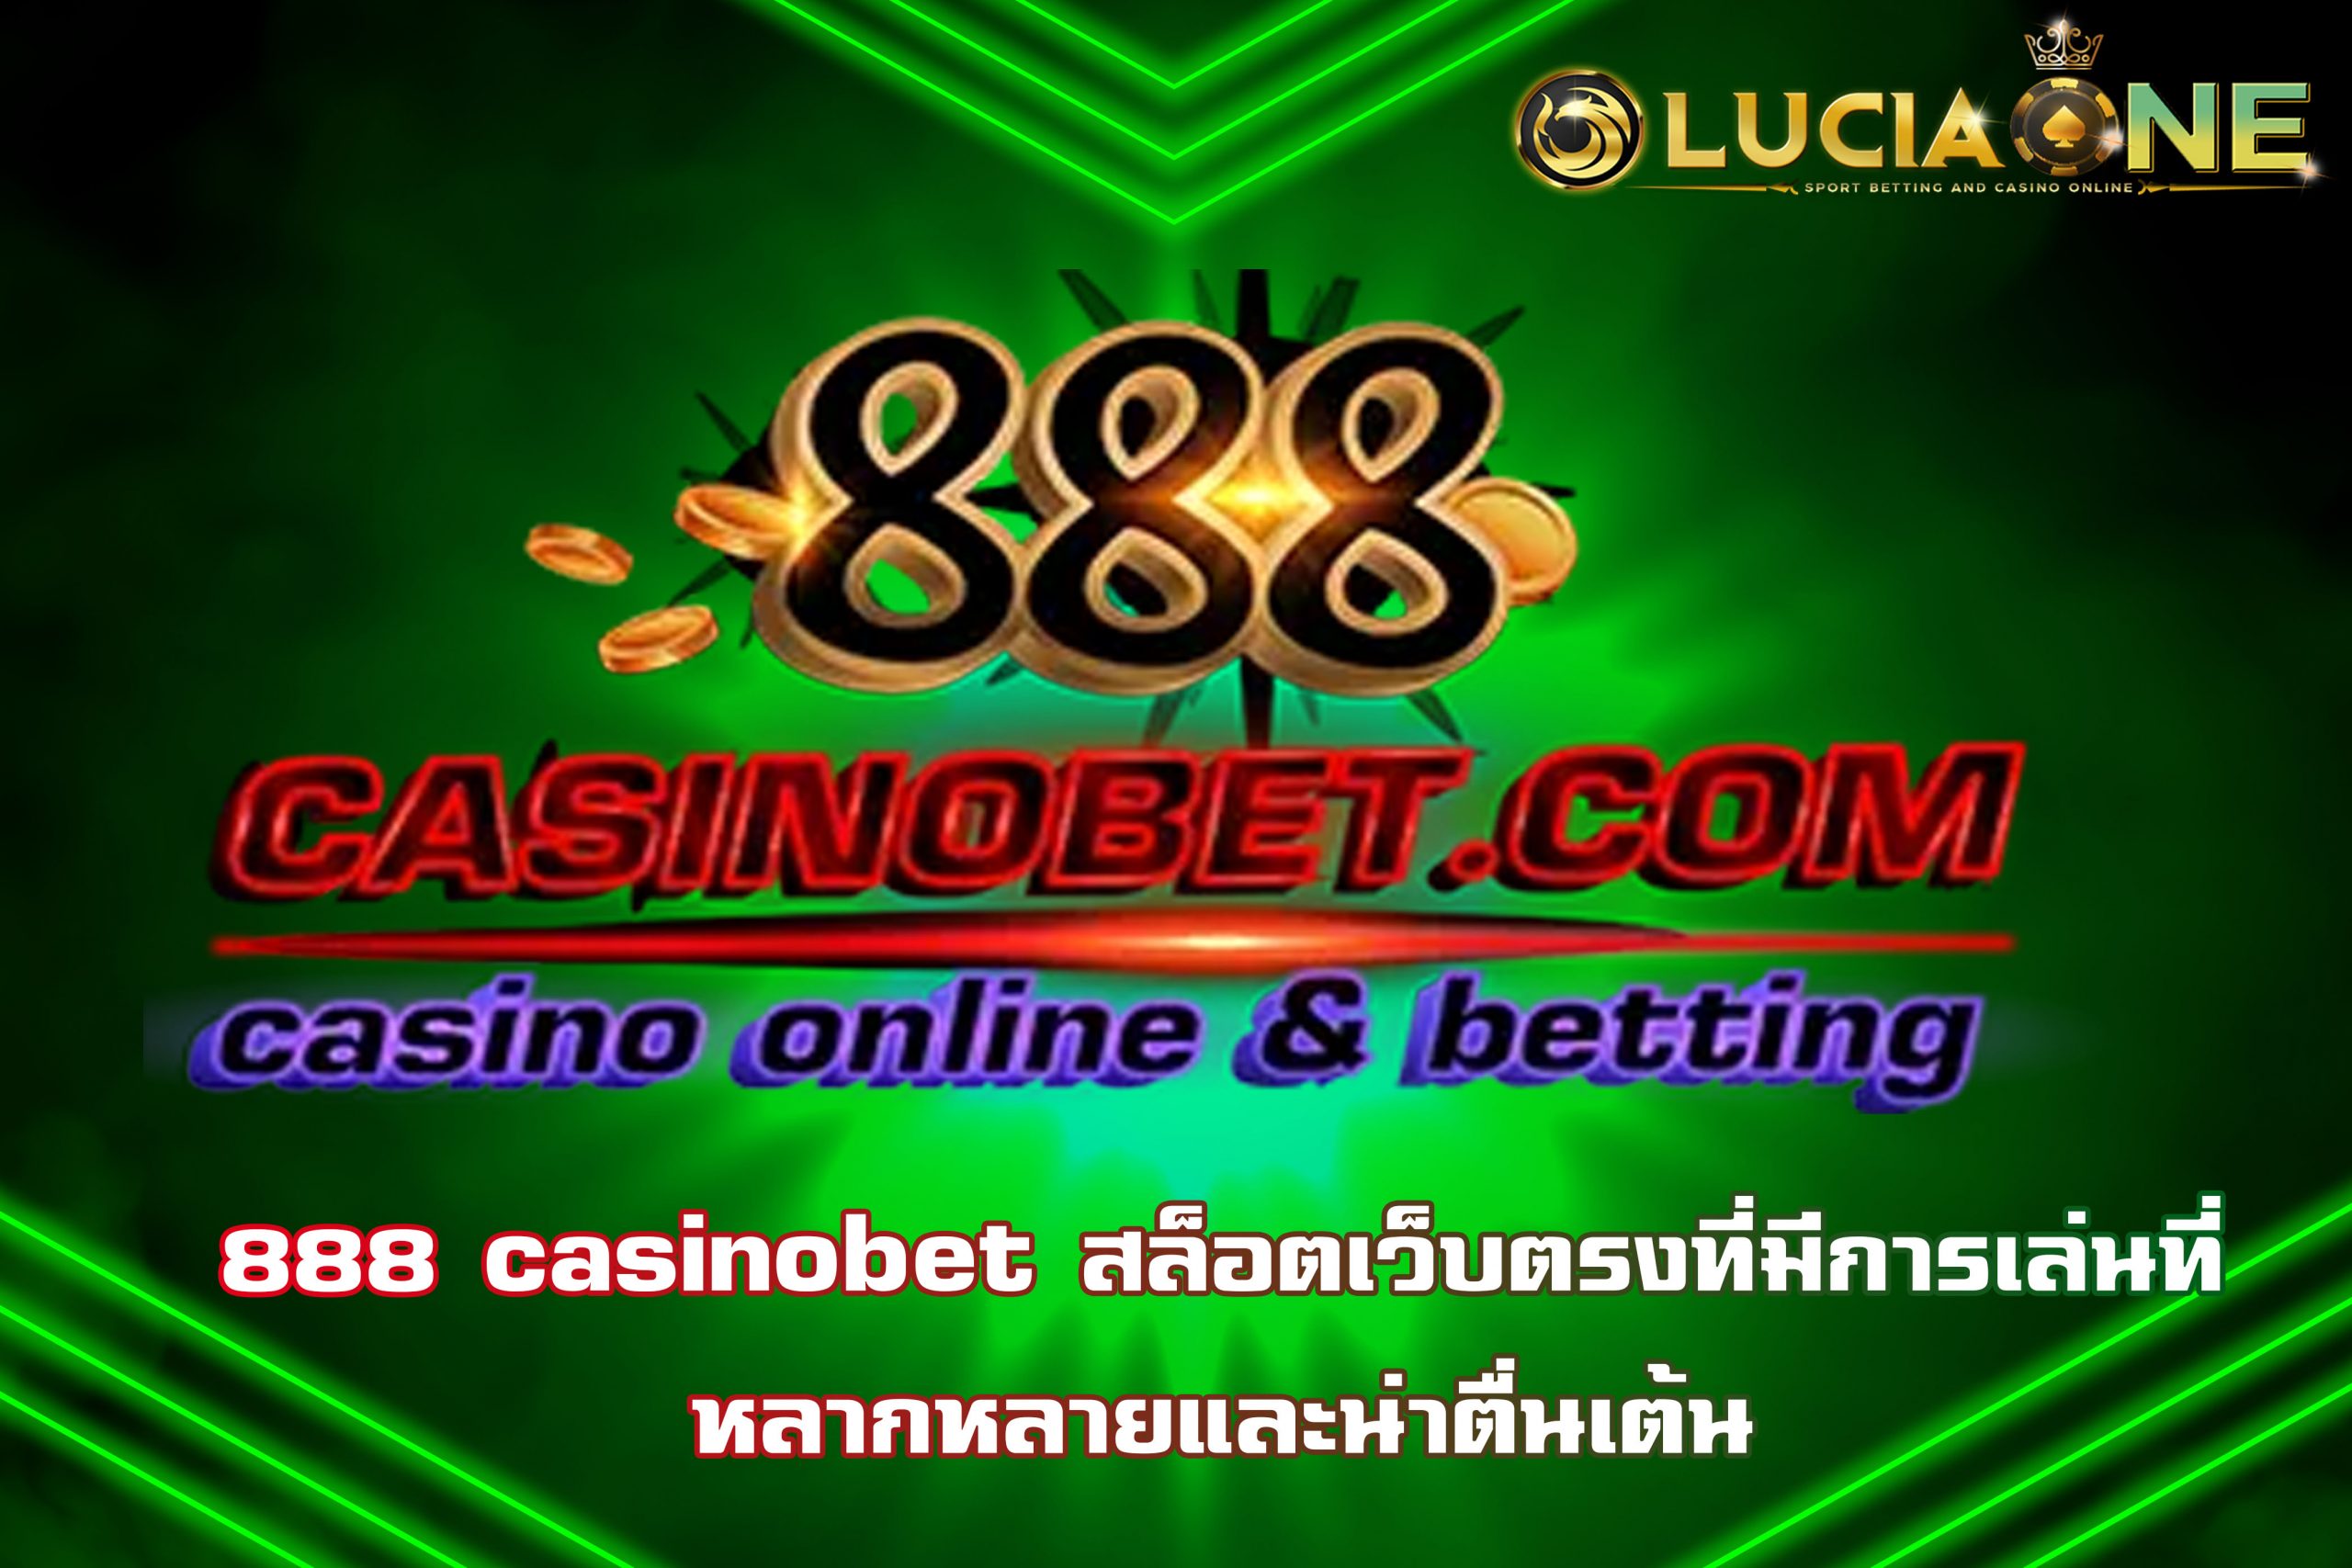 888 casinobet